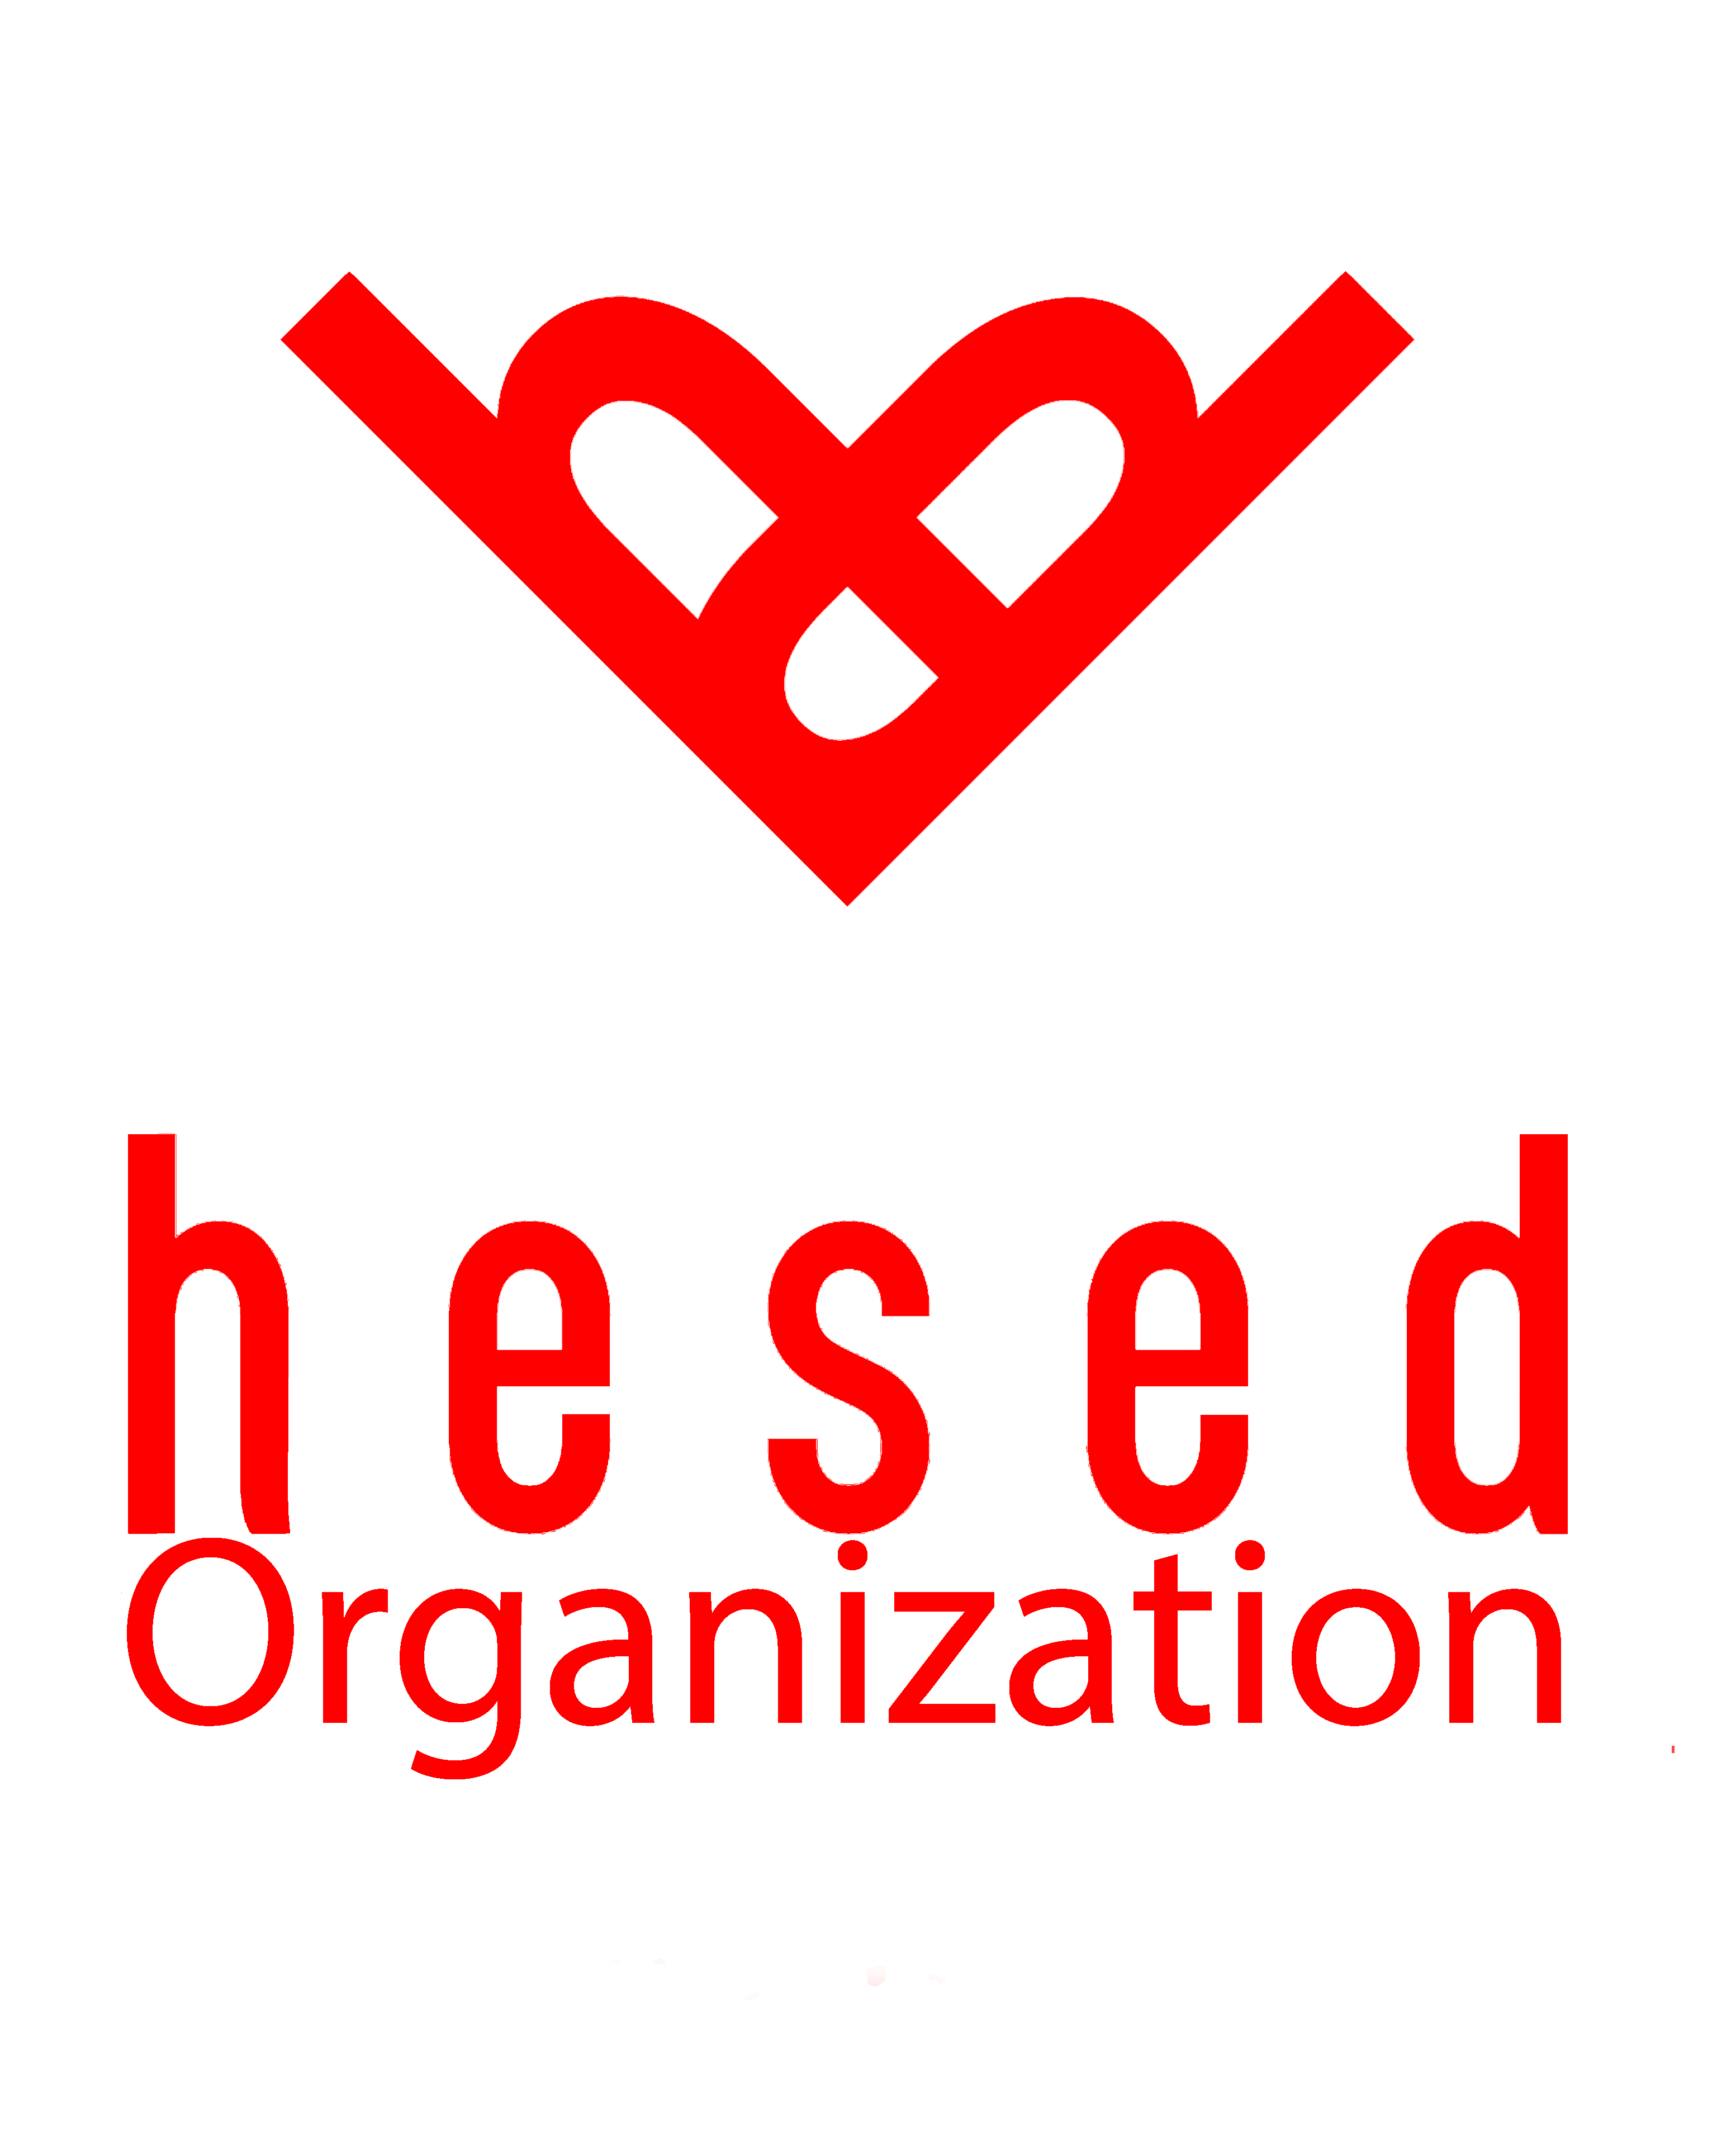 HESED ORGANIZATION INTERNATIONALE